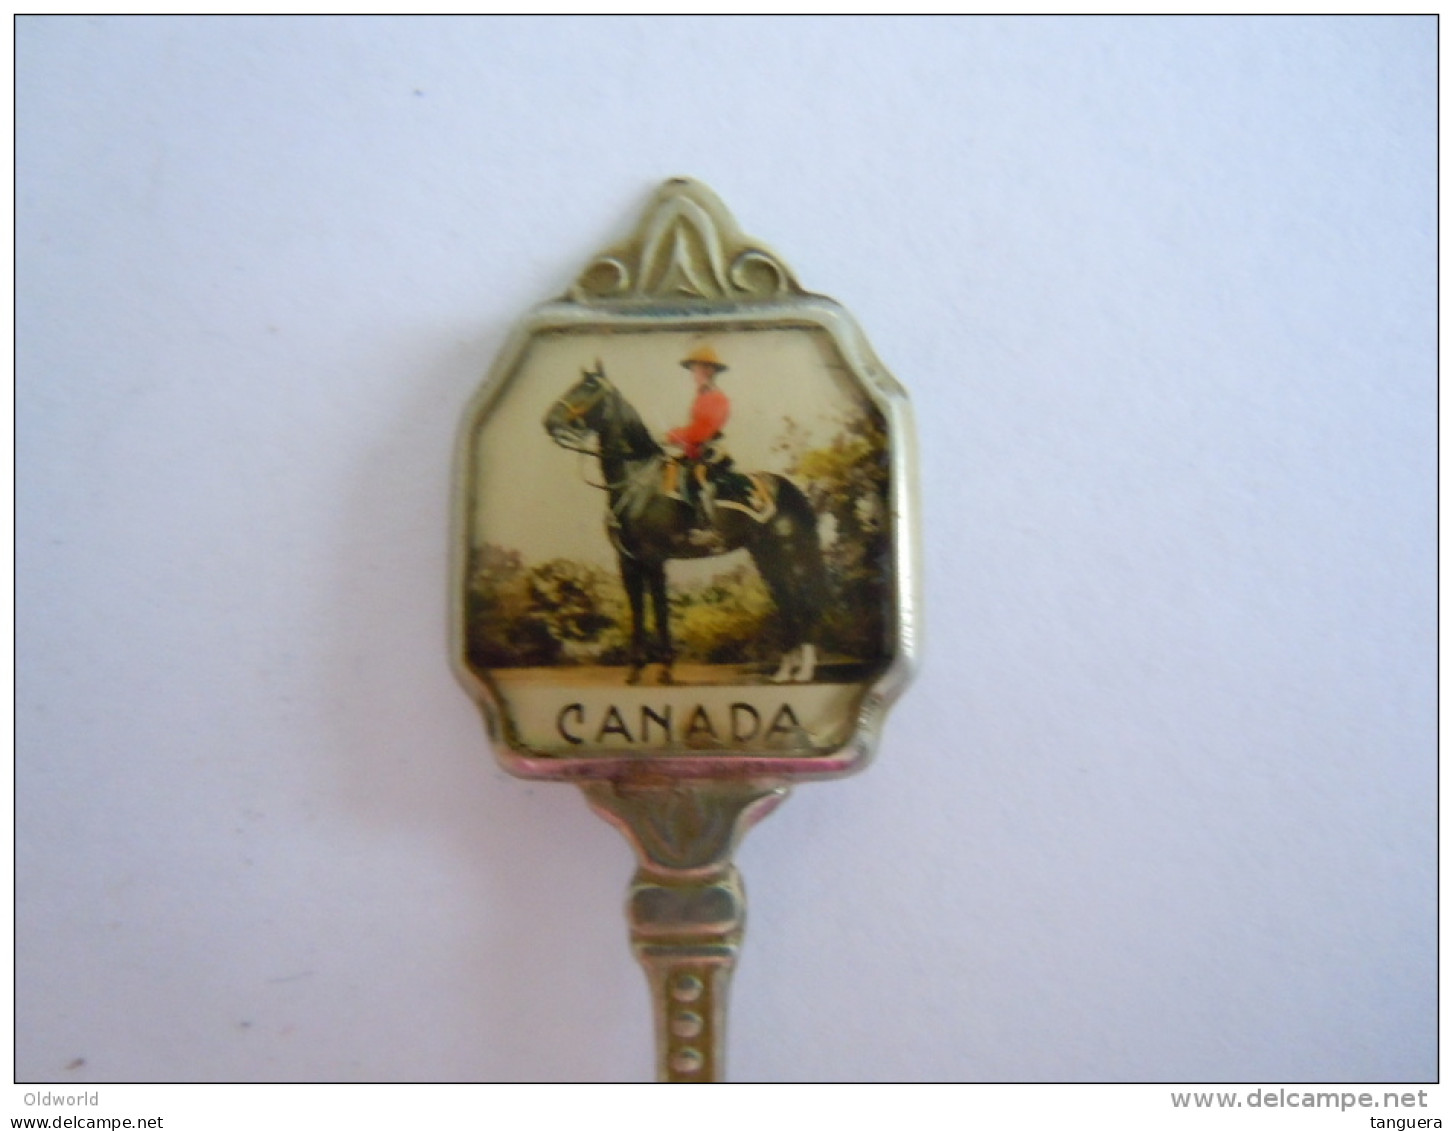 CANADA Police Bereden Politie Mounties RCMP Vintage Souvenir Lepel Petite Cuillère Little Spoon (ref 12) - Spoons